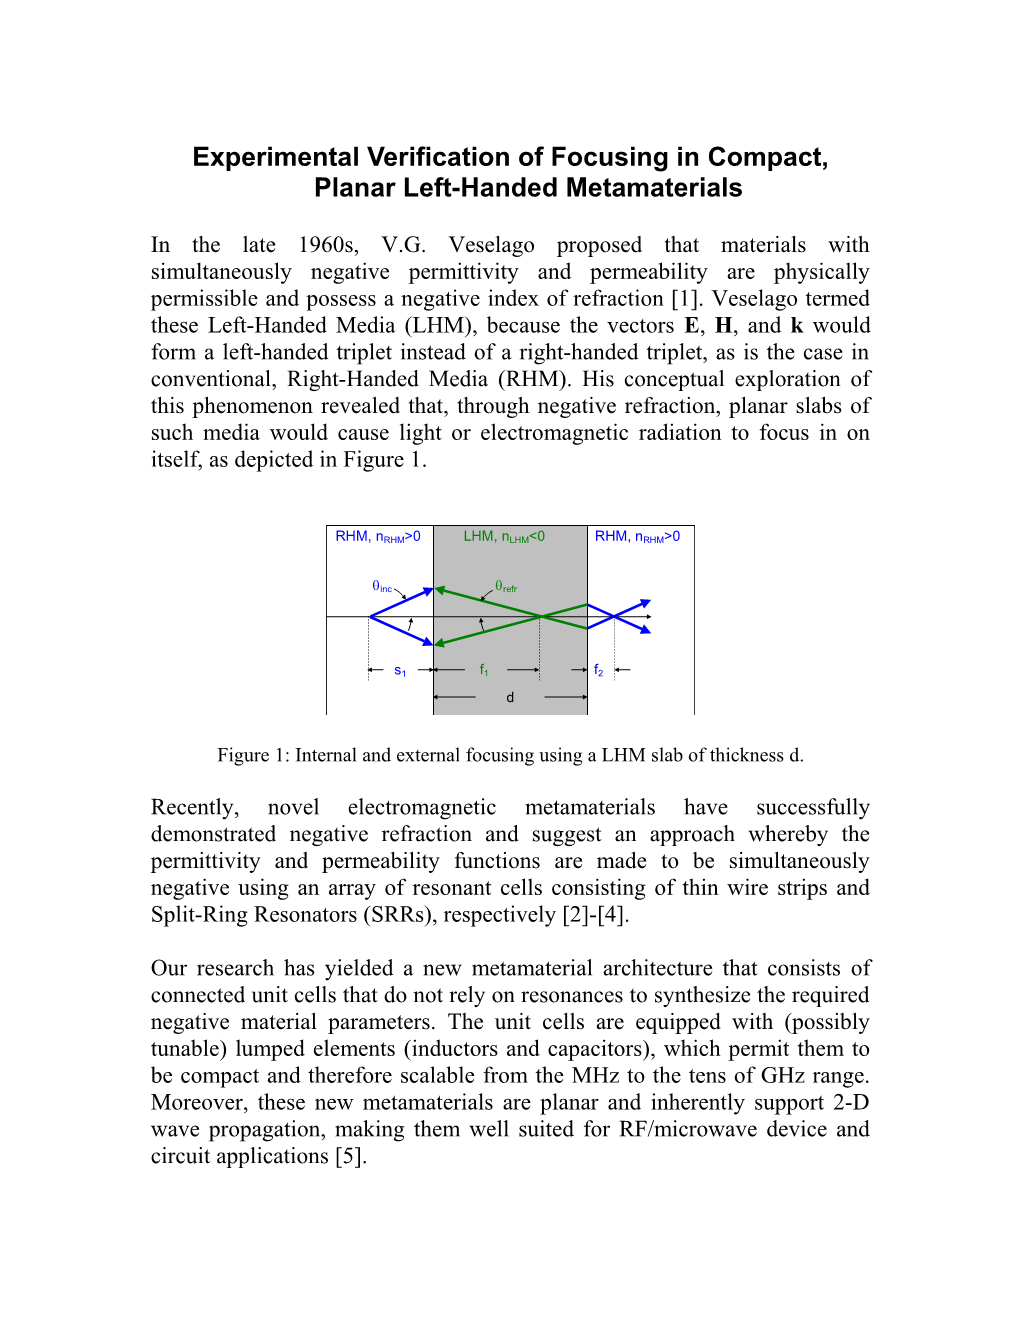 Experimental Verification of Focusing in Compact, Planar Left-Handed Metamaterials